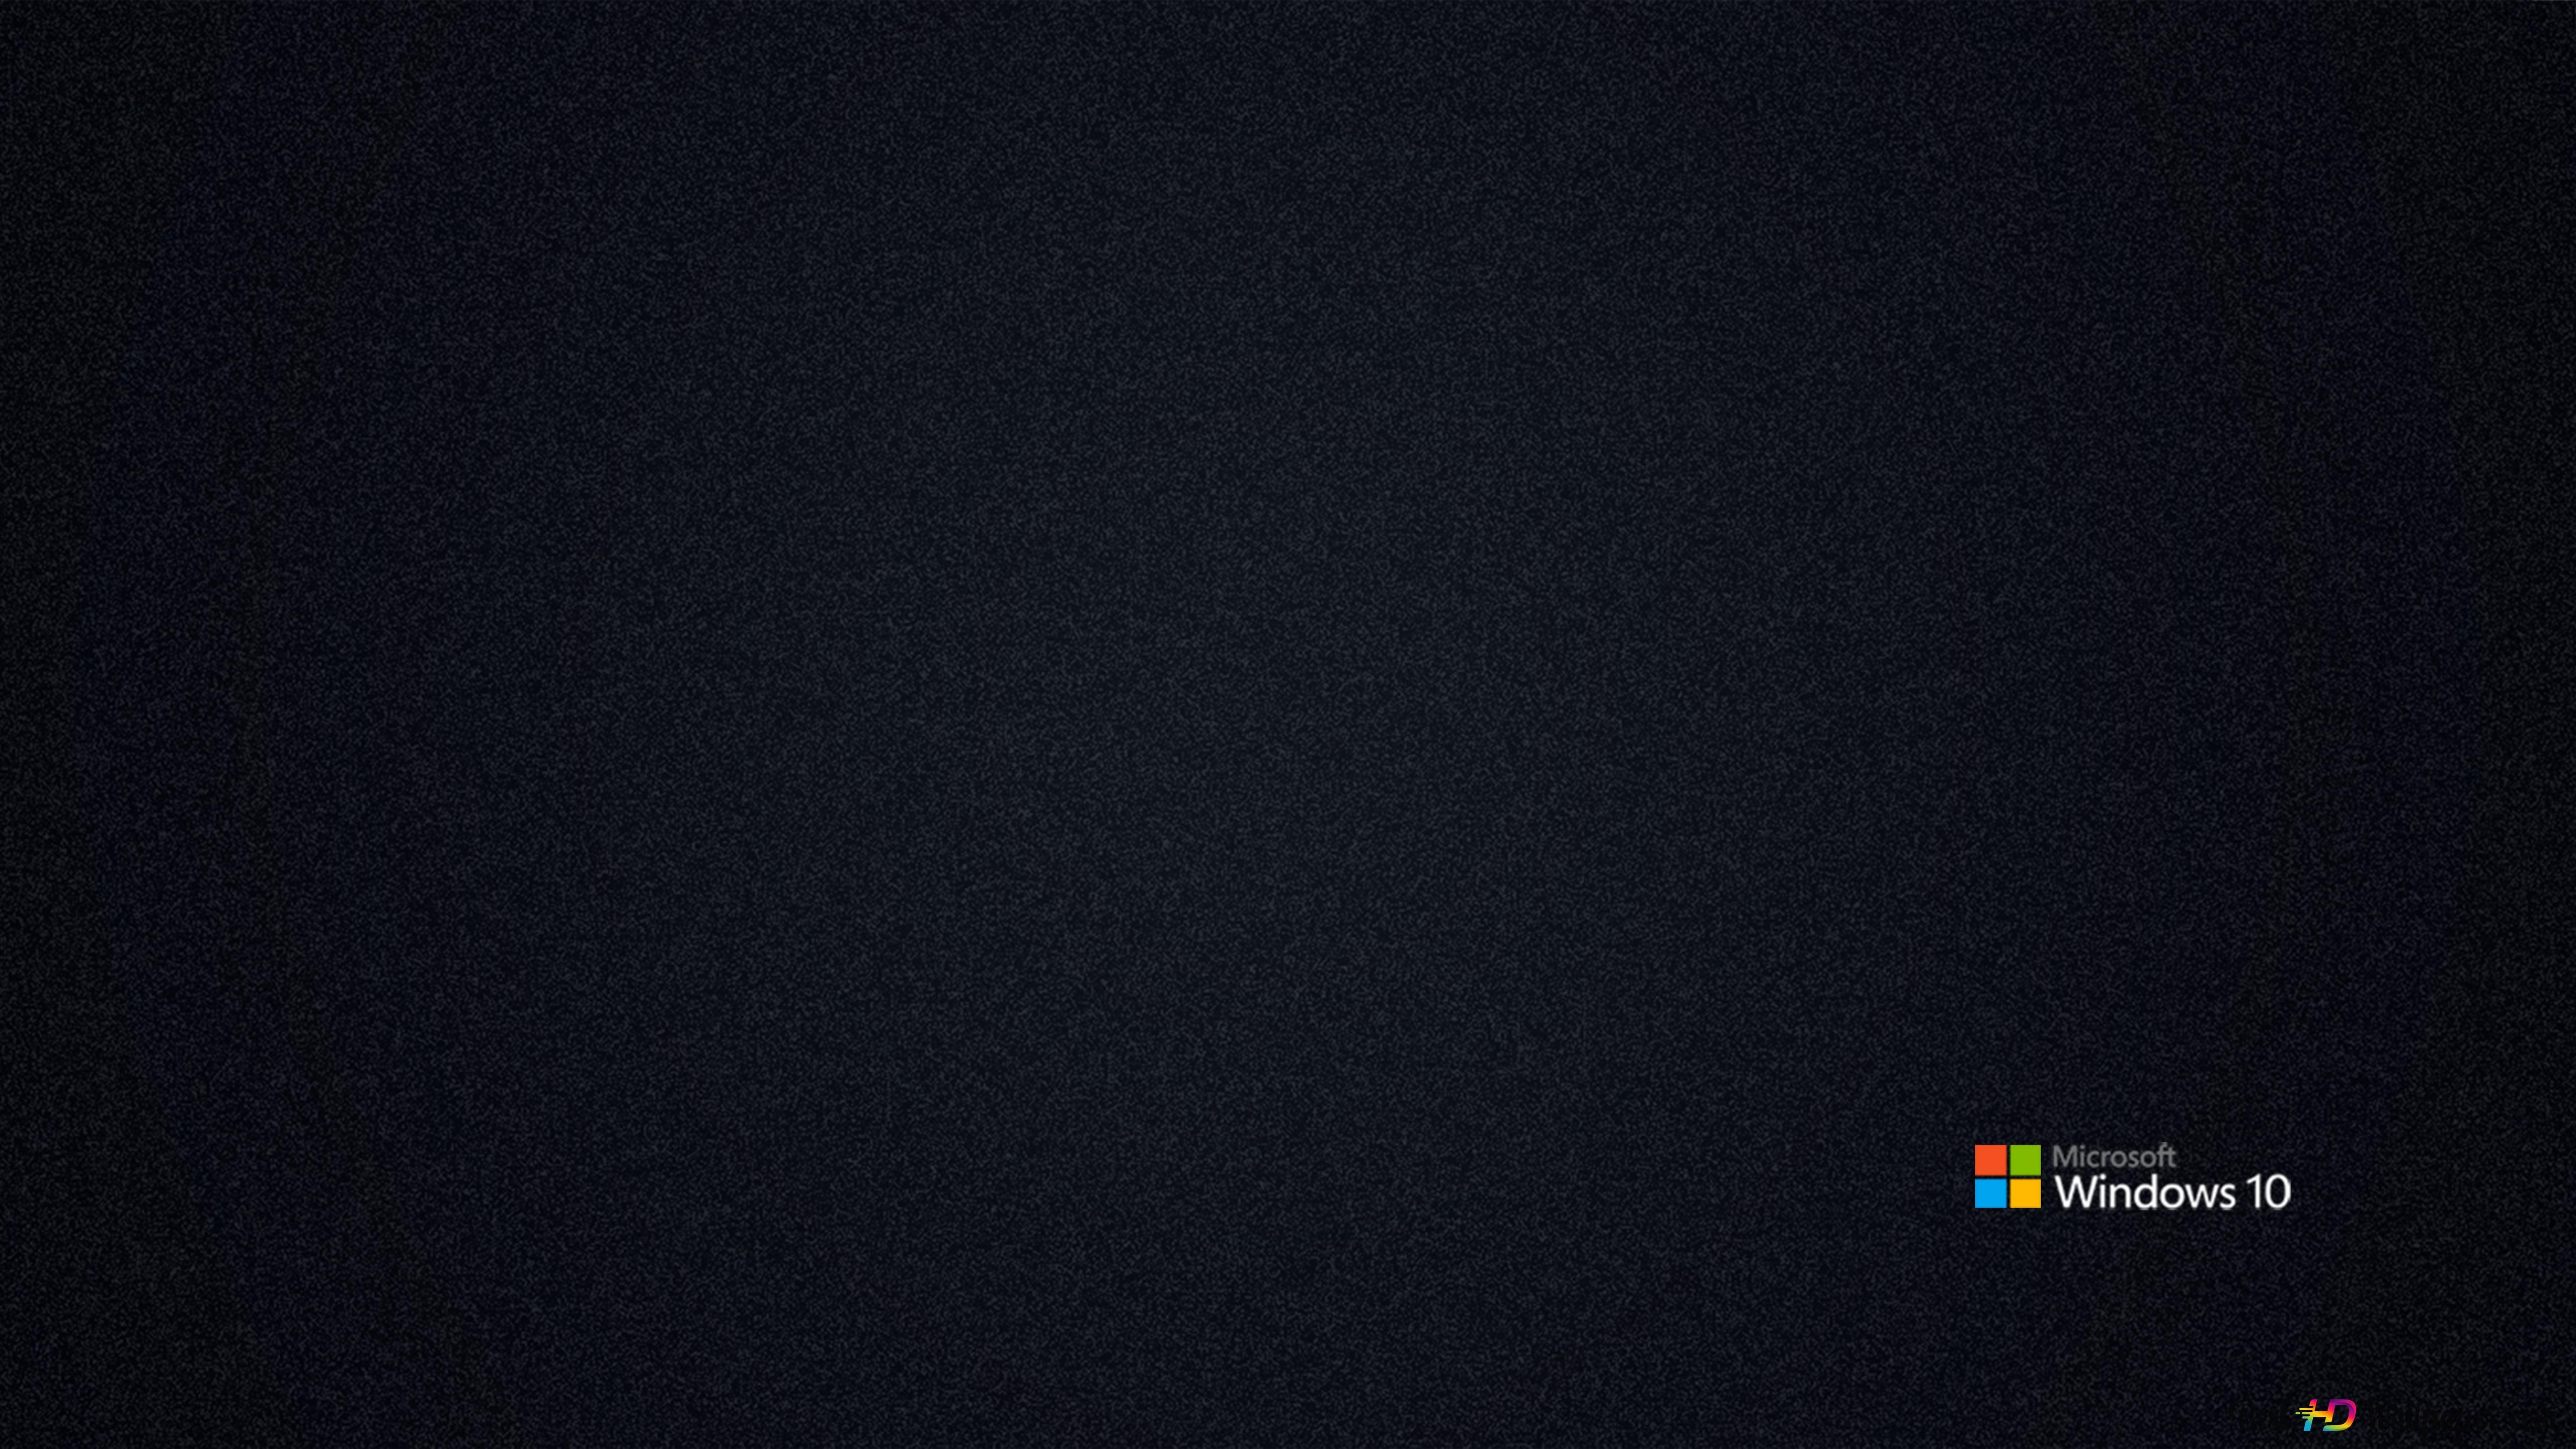 Microsoft Windows 10. Luxury Look LapK wallpaper download